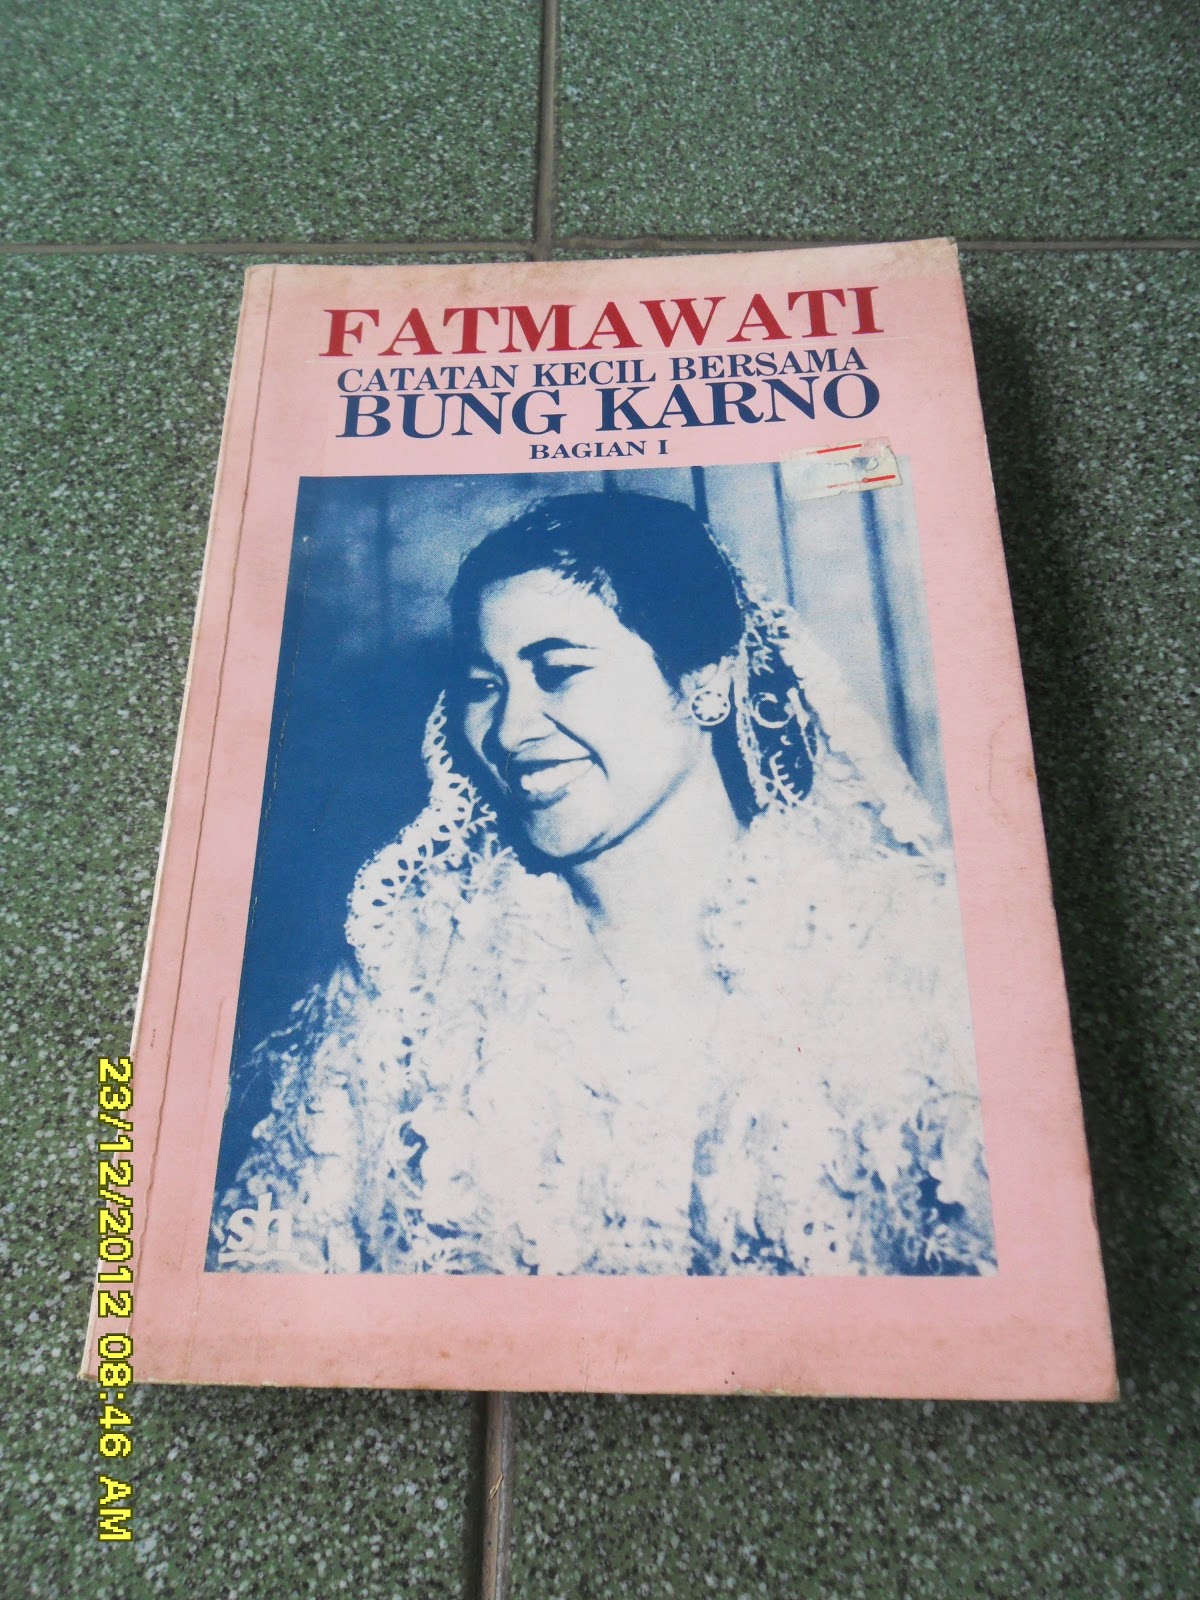 Toko Buku Bekas Online Paksrimo 2: Fatmawati - Catatan 